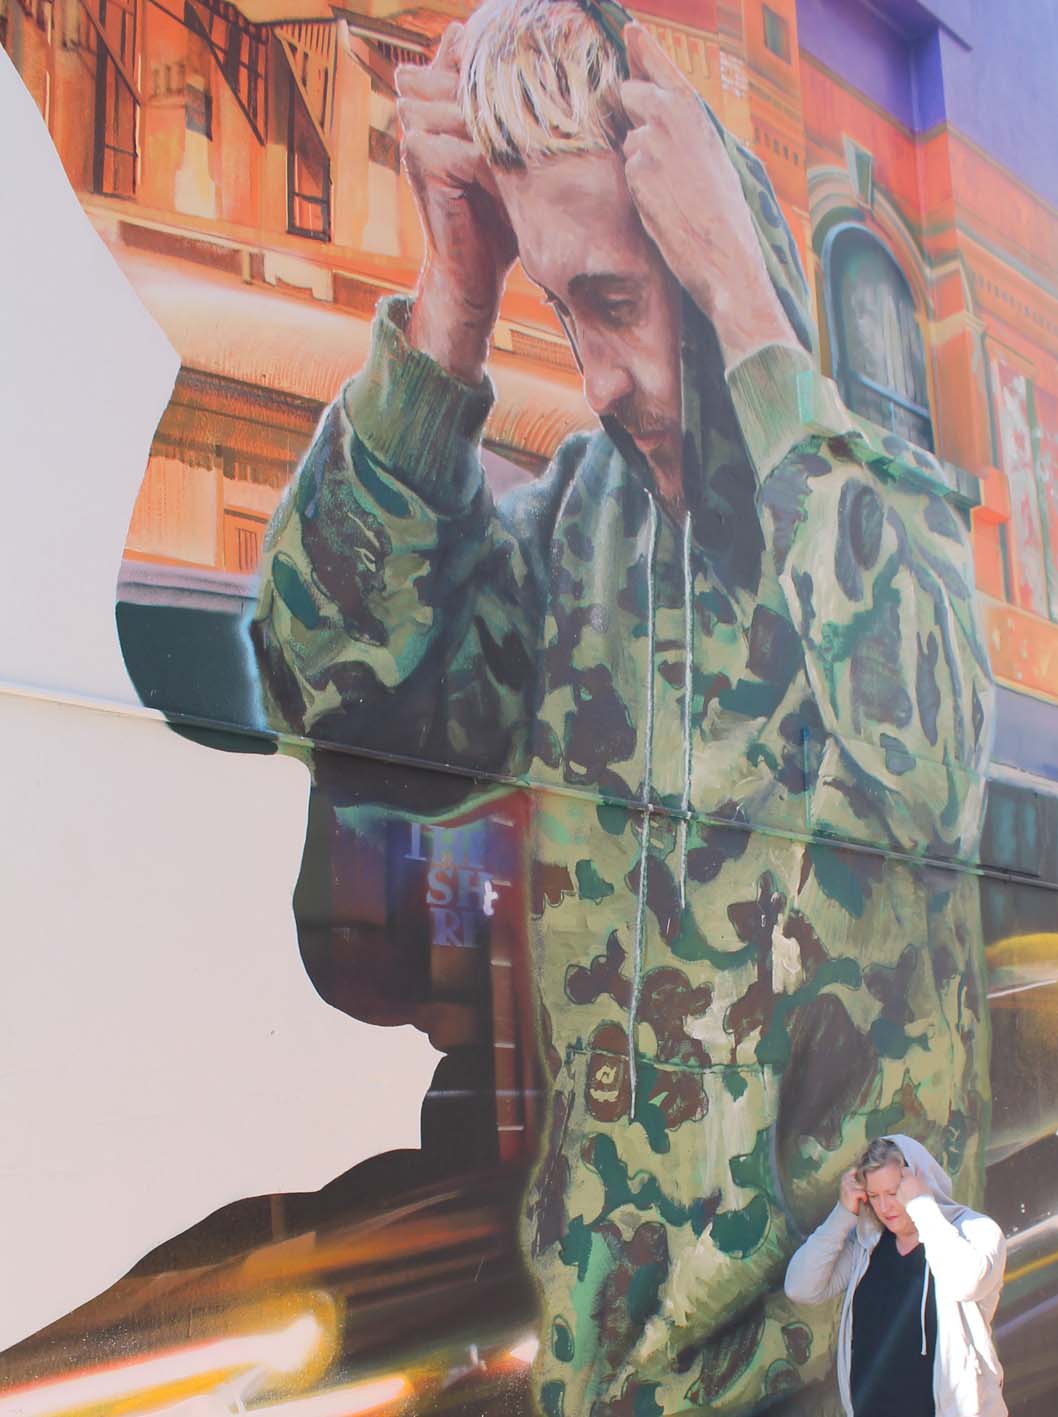 Selfie with street art Photo: Denise Cullen